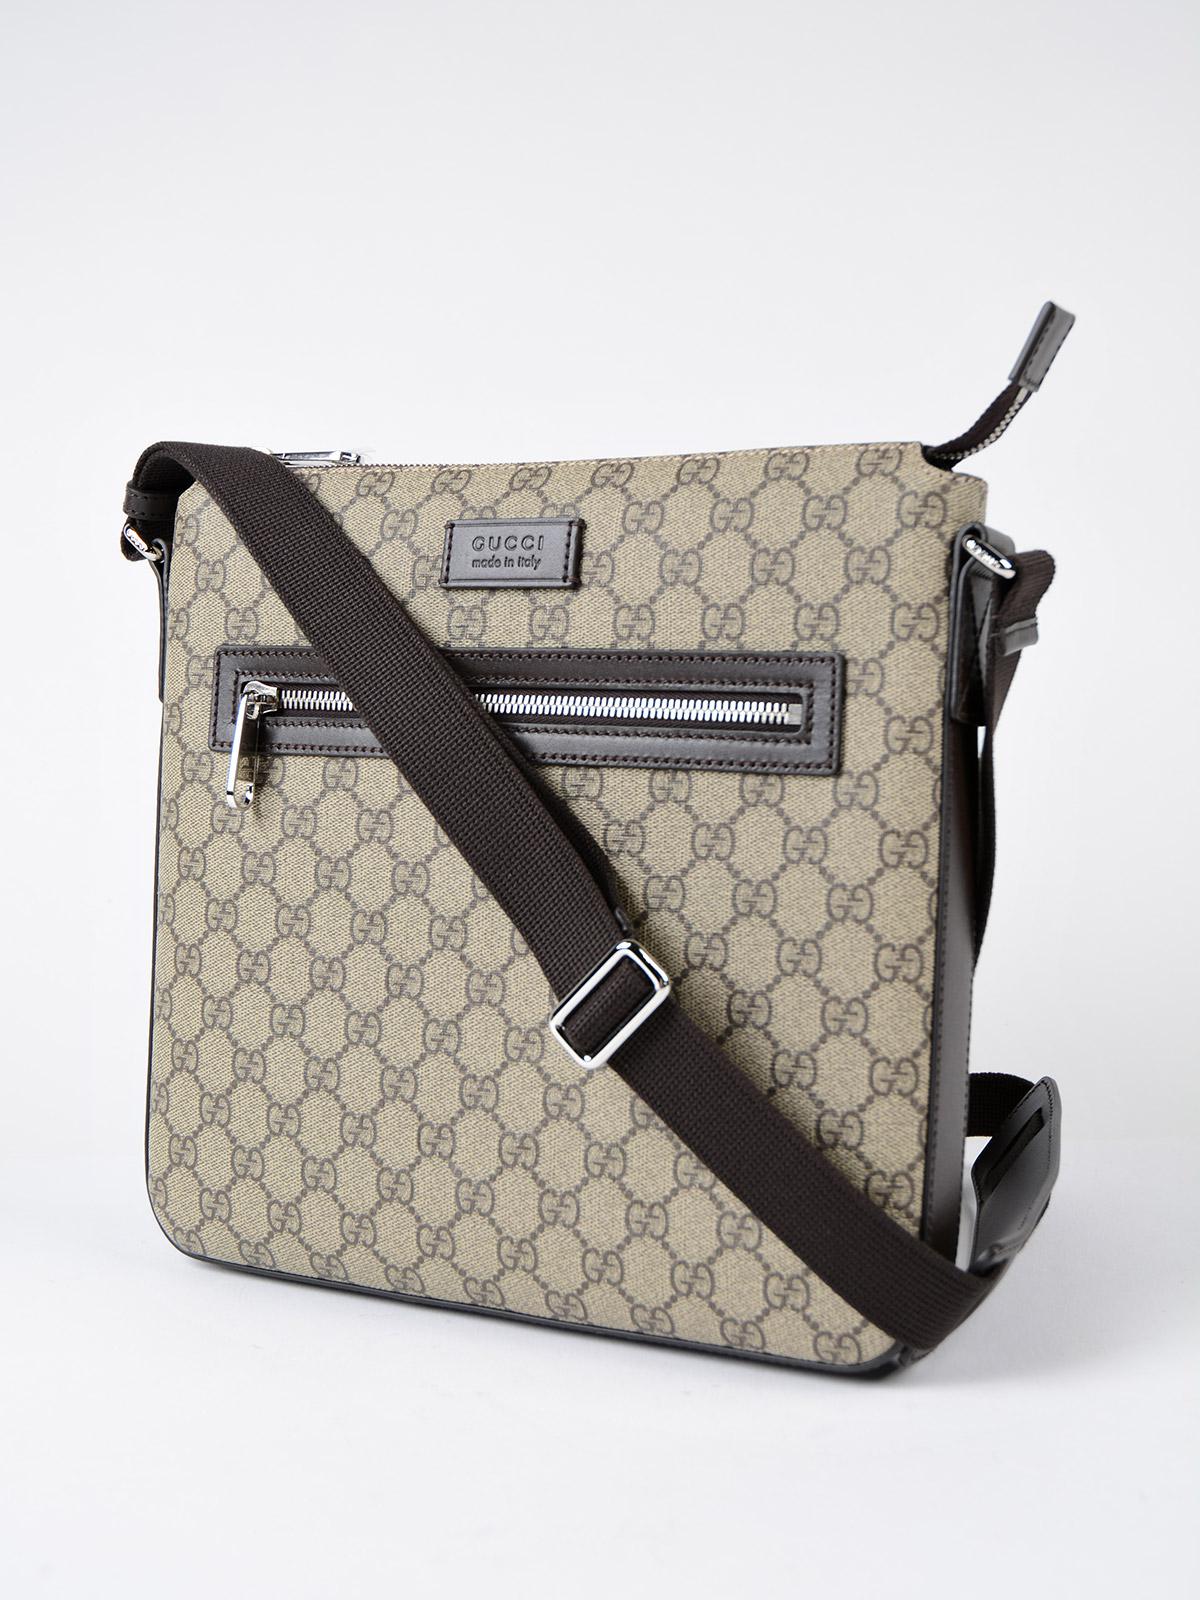 Gucci Gg Eden Messenger Bag for Men - Lyst